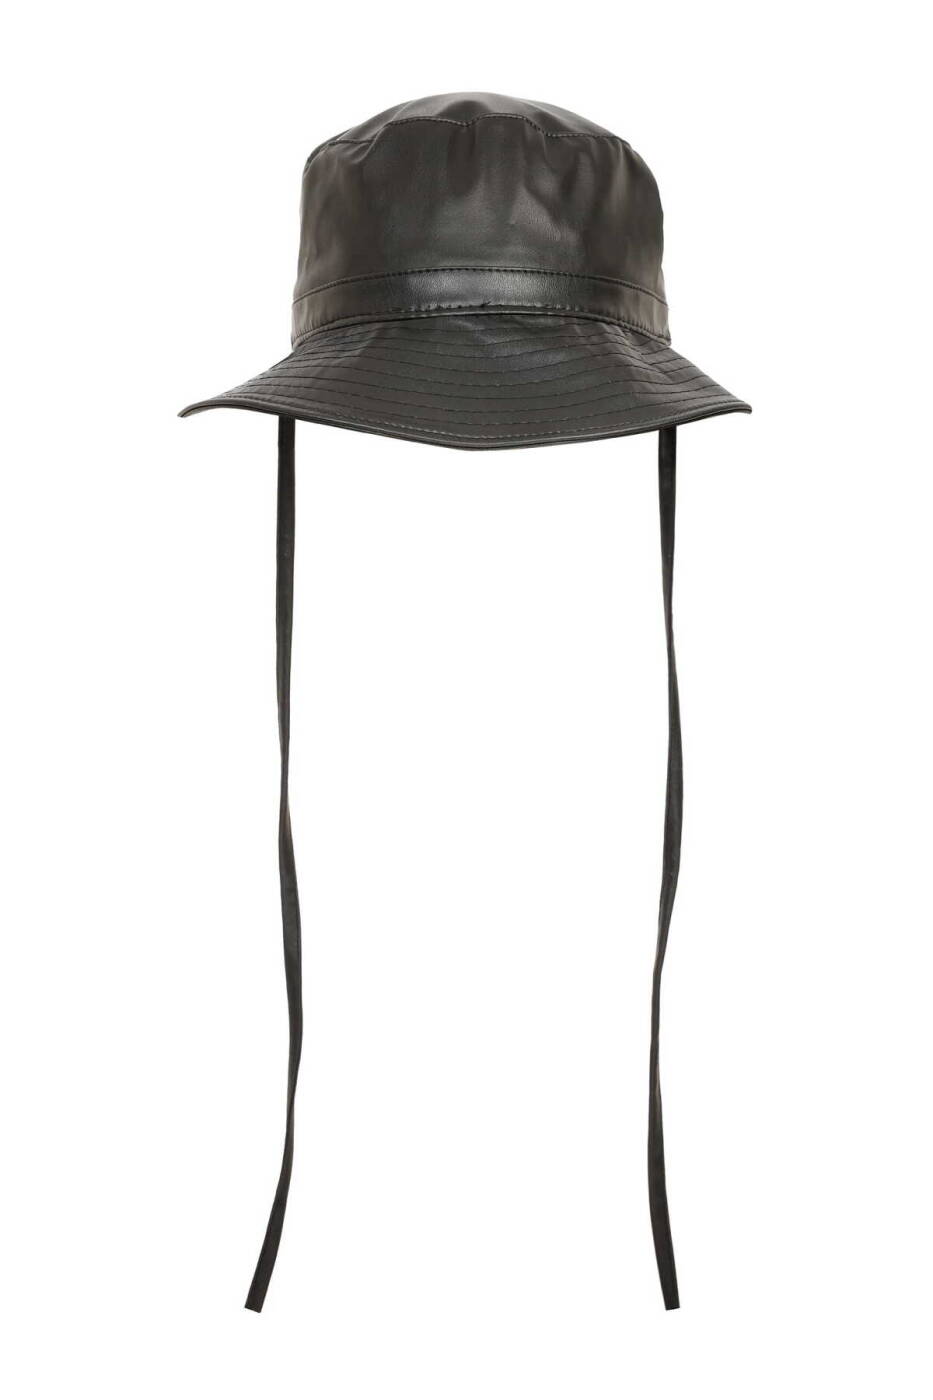  Bağlamalı Şapka Siyah - 4